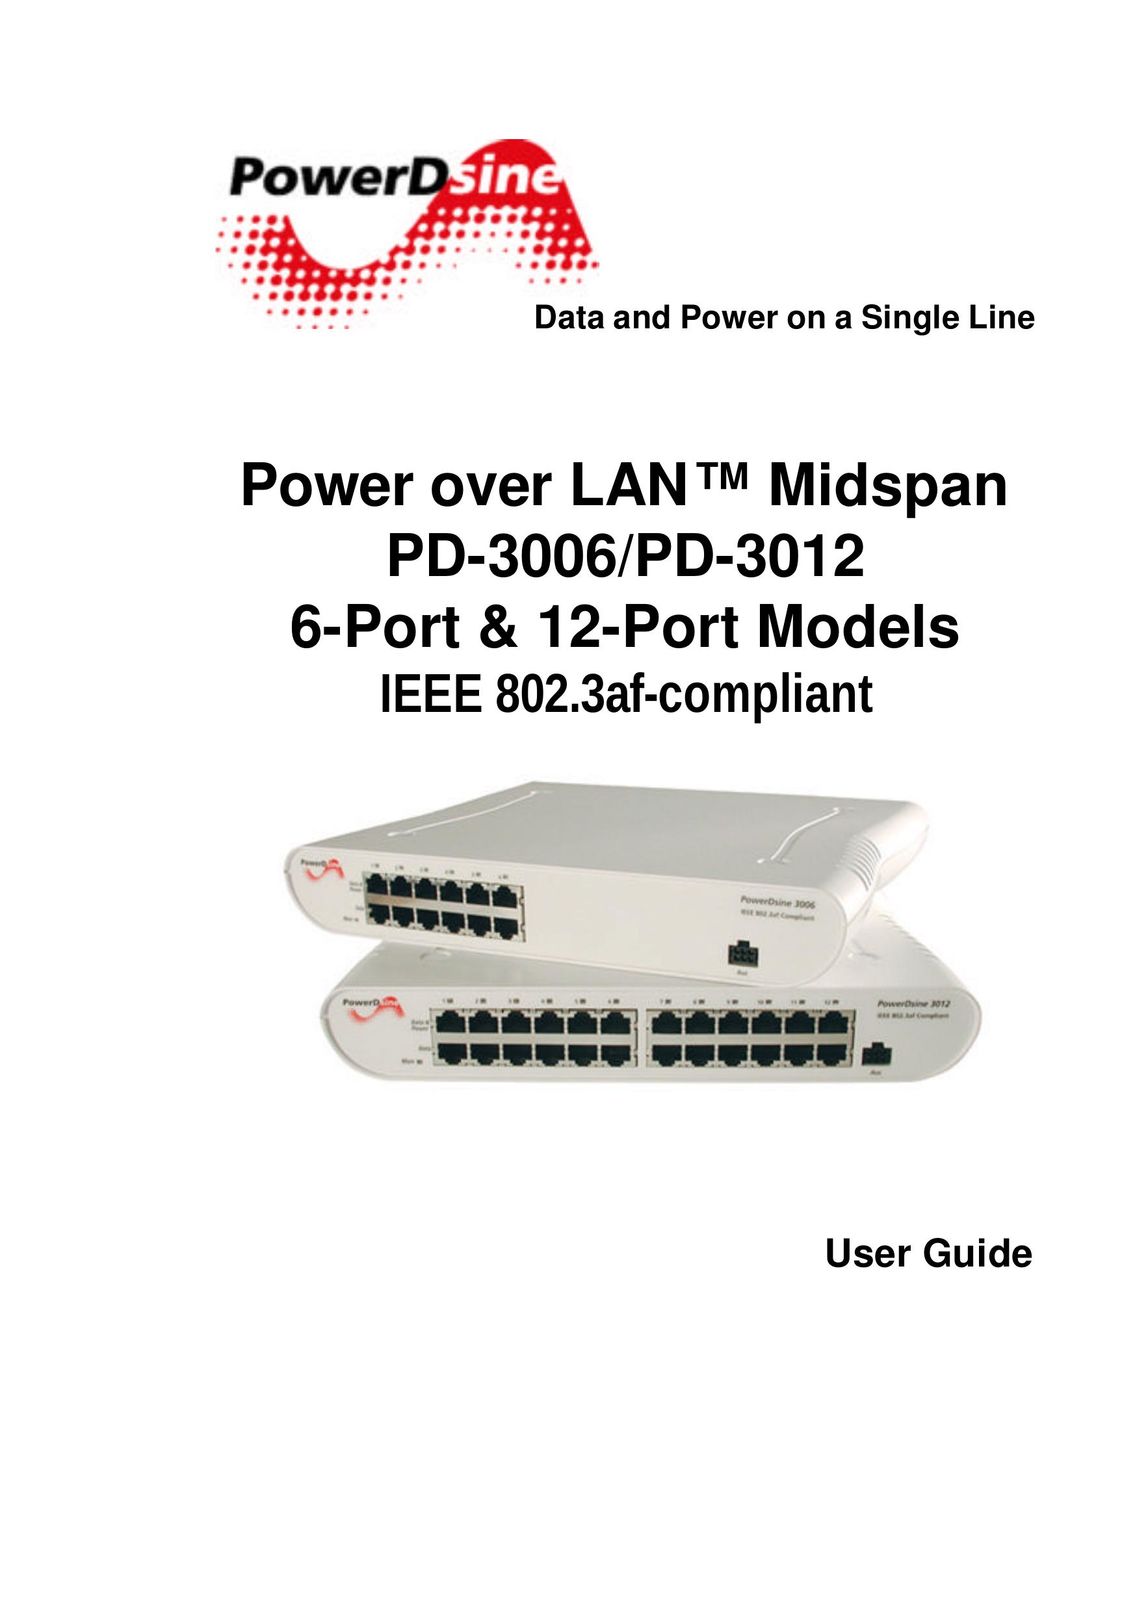 PowerDsine PD-3012 Network Card User Manual